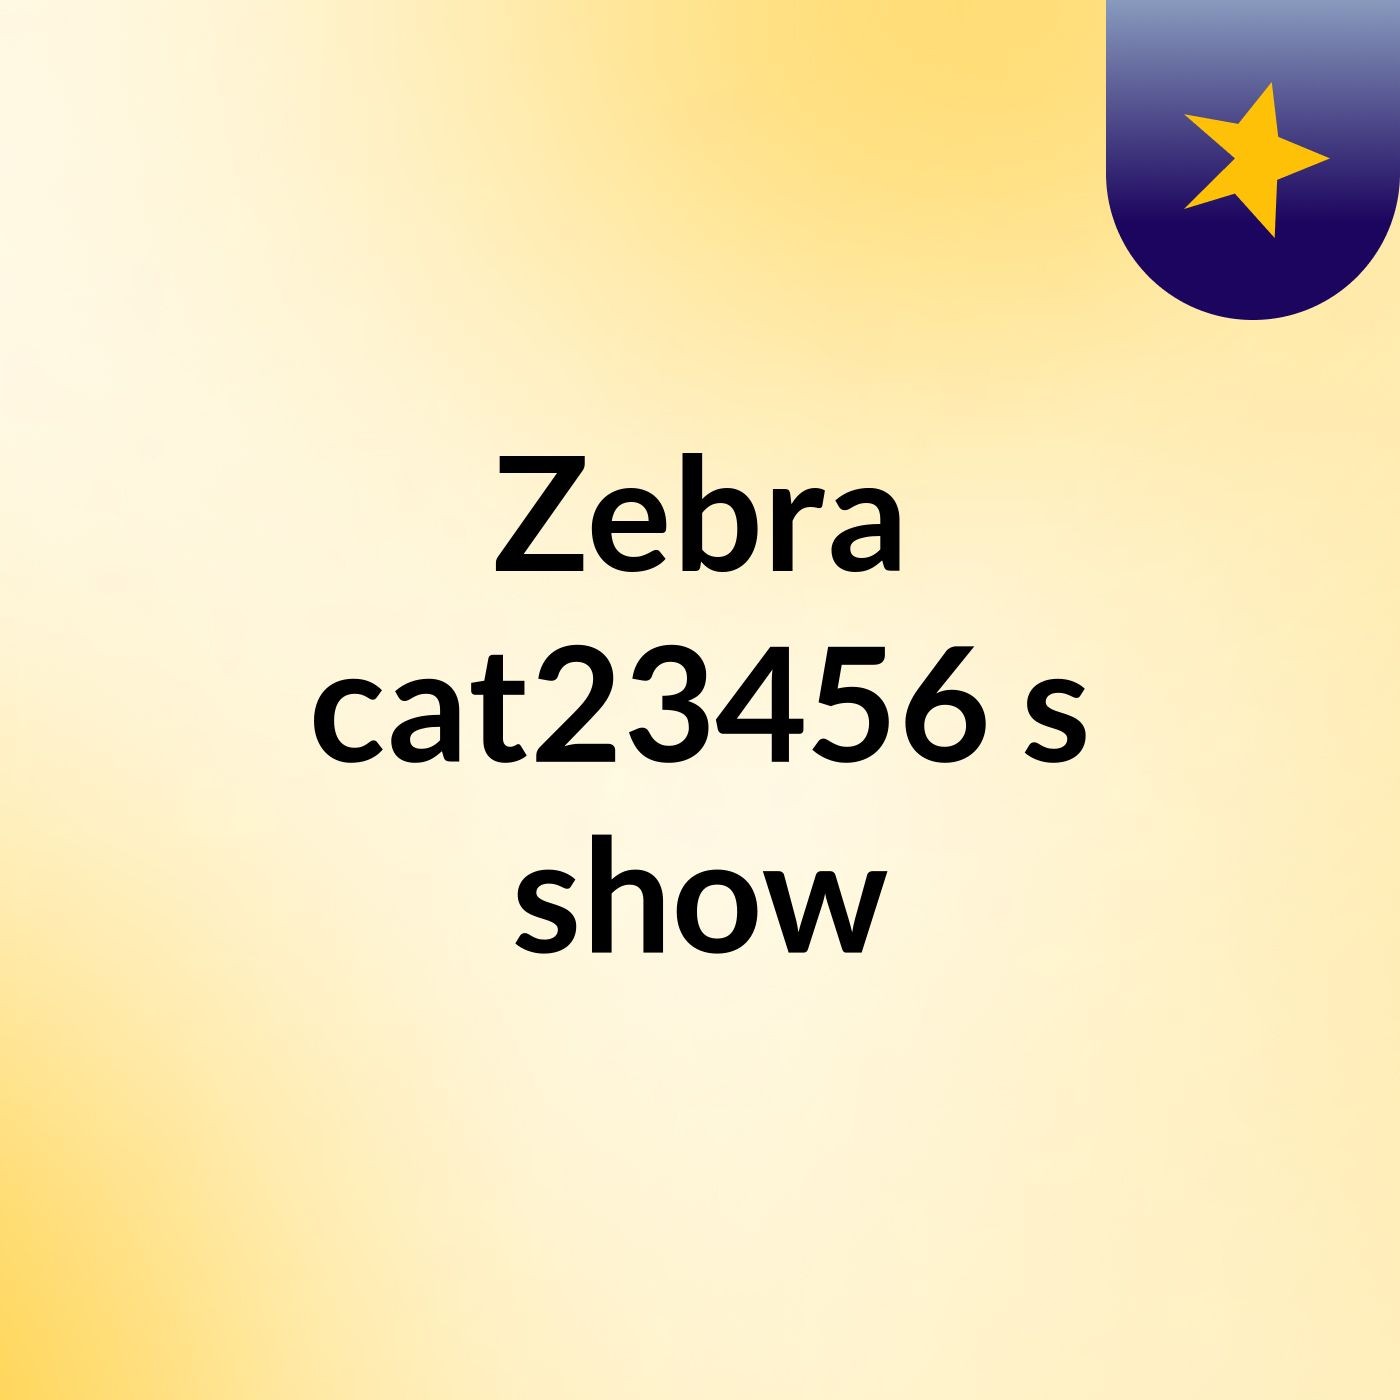 Episode 5 - Zebra cat23456's show